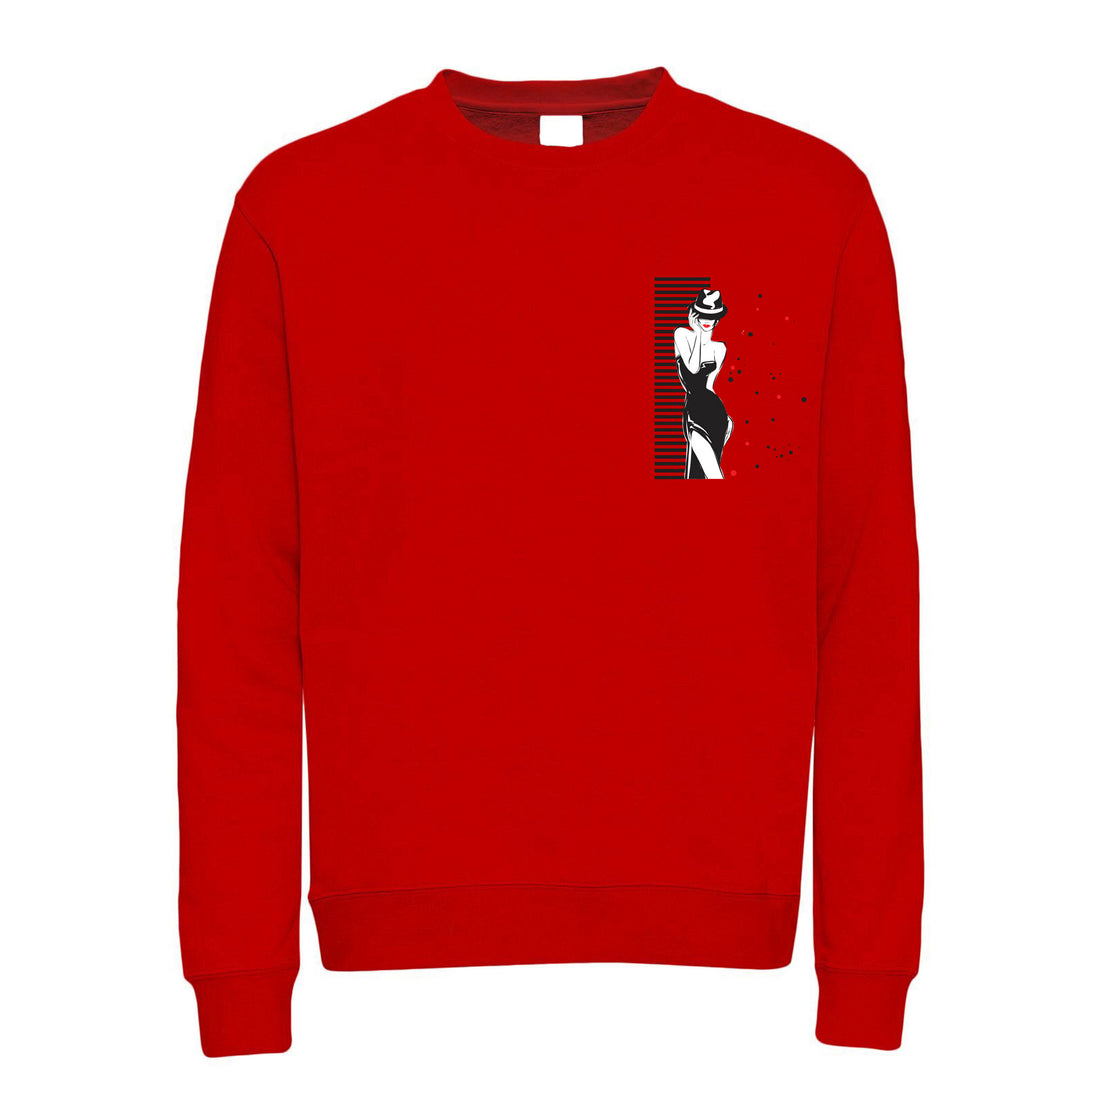 Vintage Red Crewneck Sweatshirt Lady